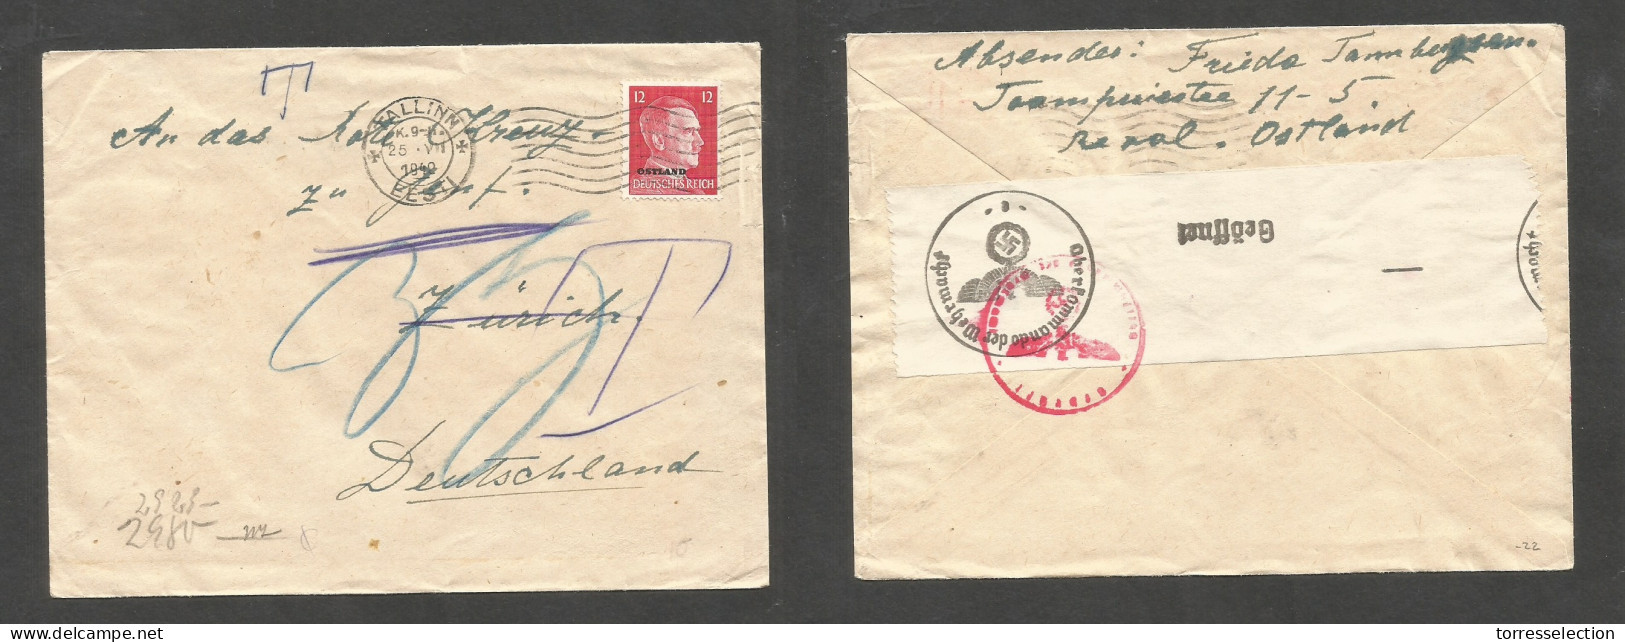 ESTONIA. 1940 (25 July) Nazi Occup. Tallinn - Switzerland, Zurich. Comercial Single Fkd Hitler Ovptd 12p Envelope Rollin - Estonia